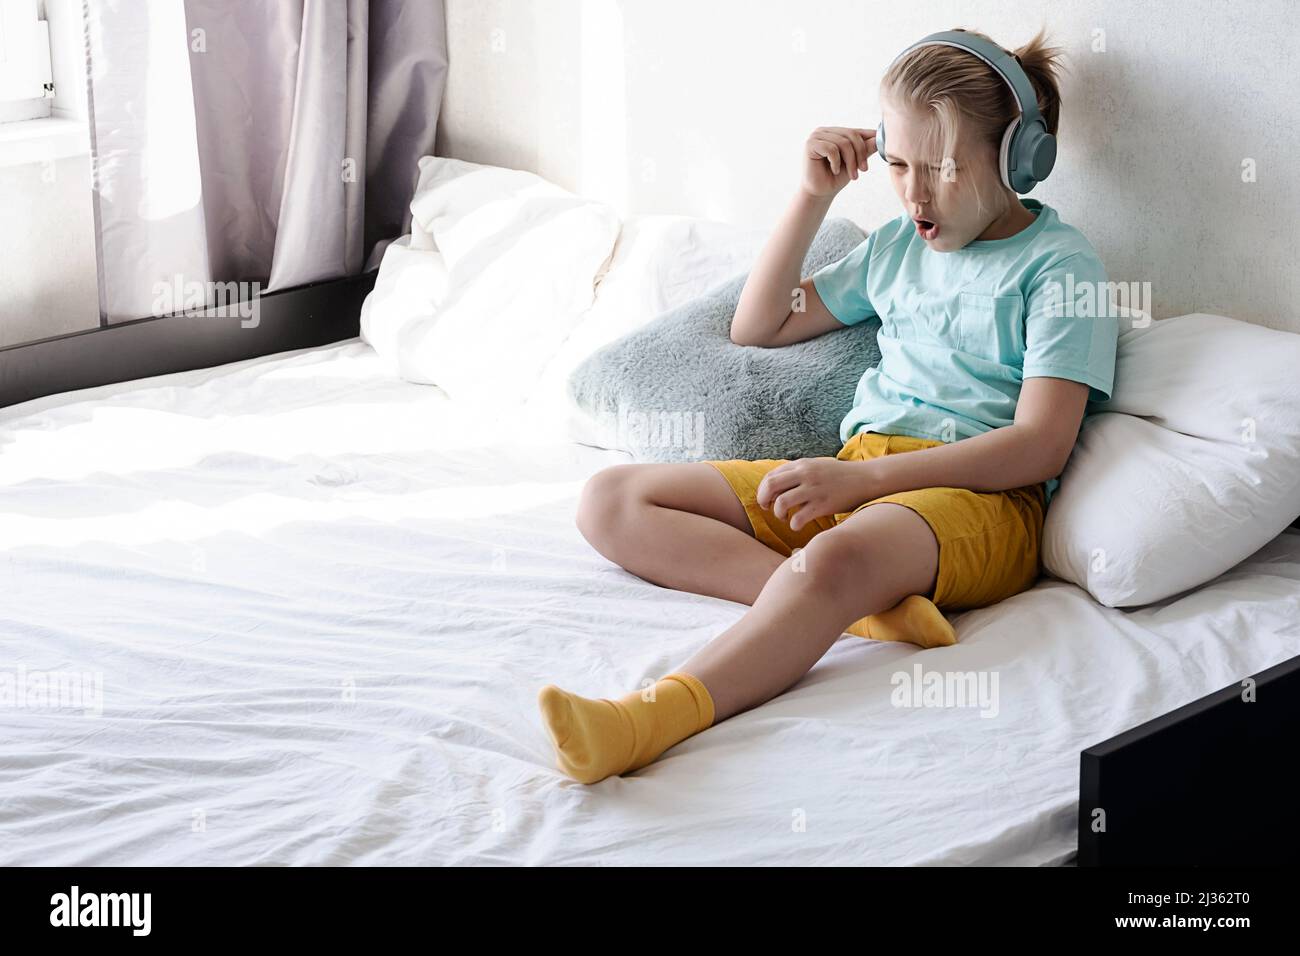 Child wearing headphones listens to music. Boy listening to music in headphones seating on bed. Stock Photo